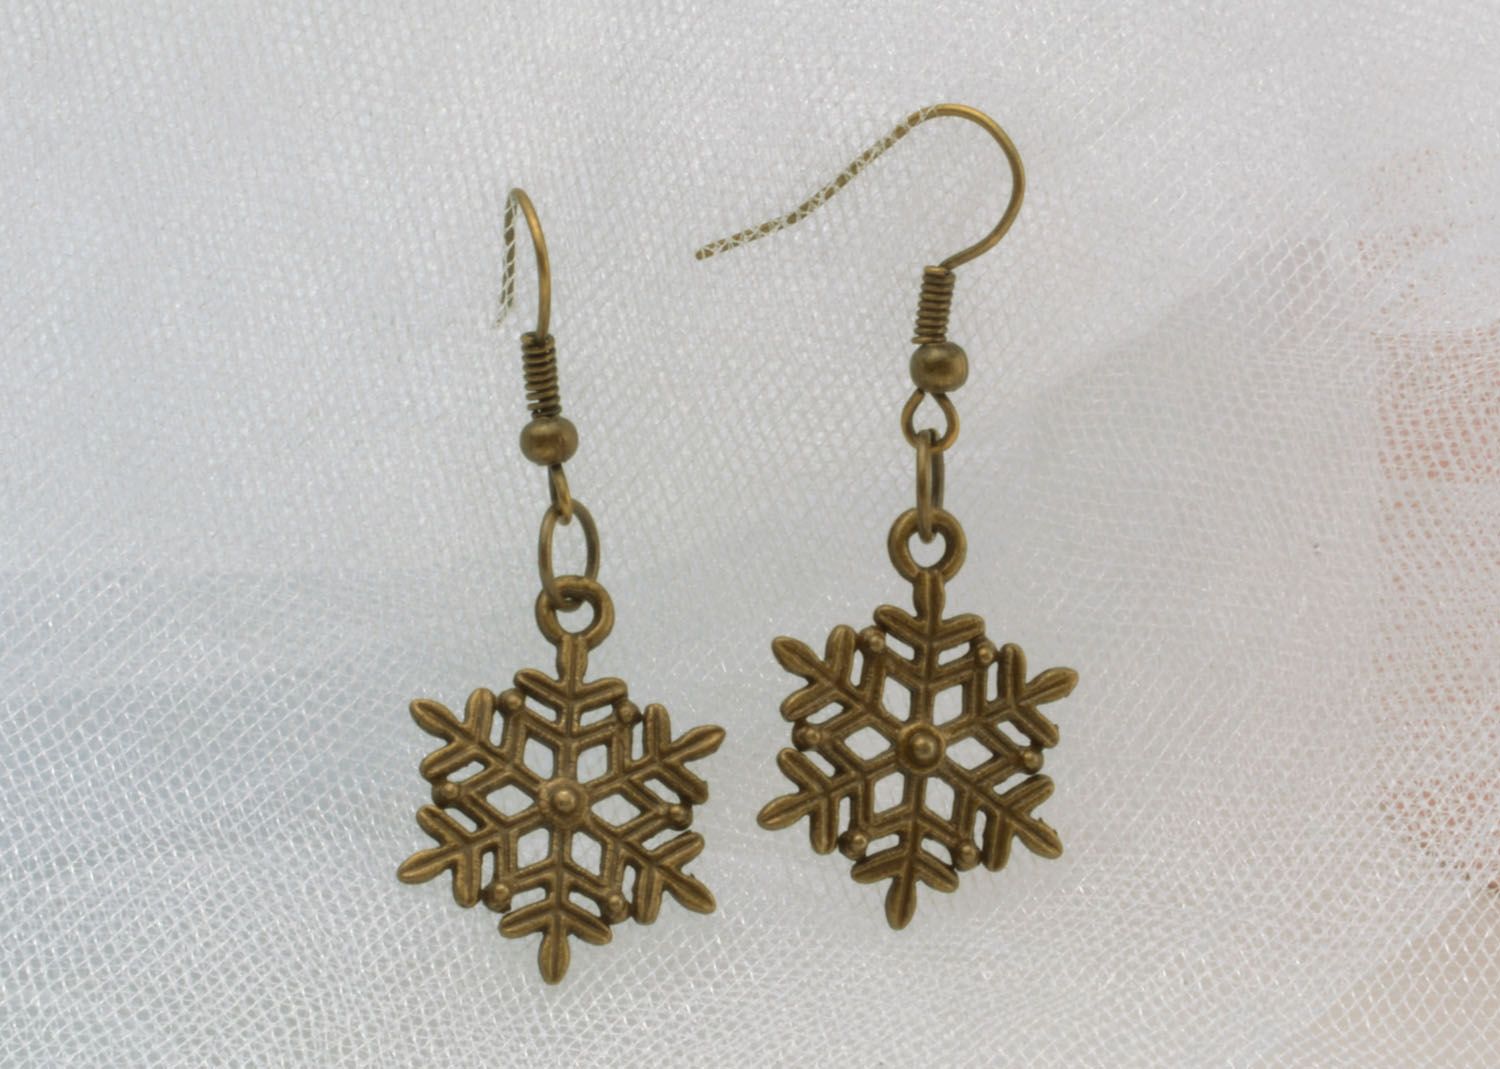 Metal earrings in the shape of snowflakes photo 1